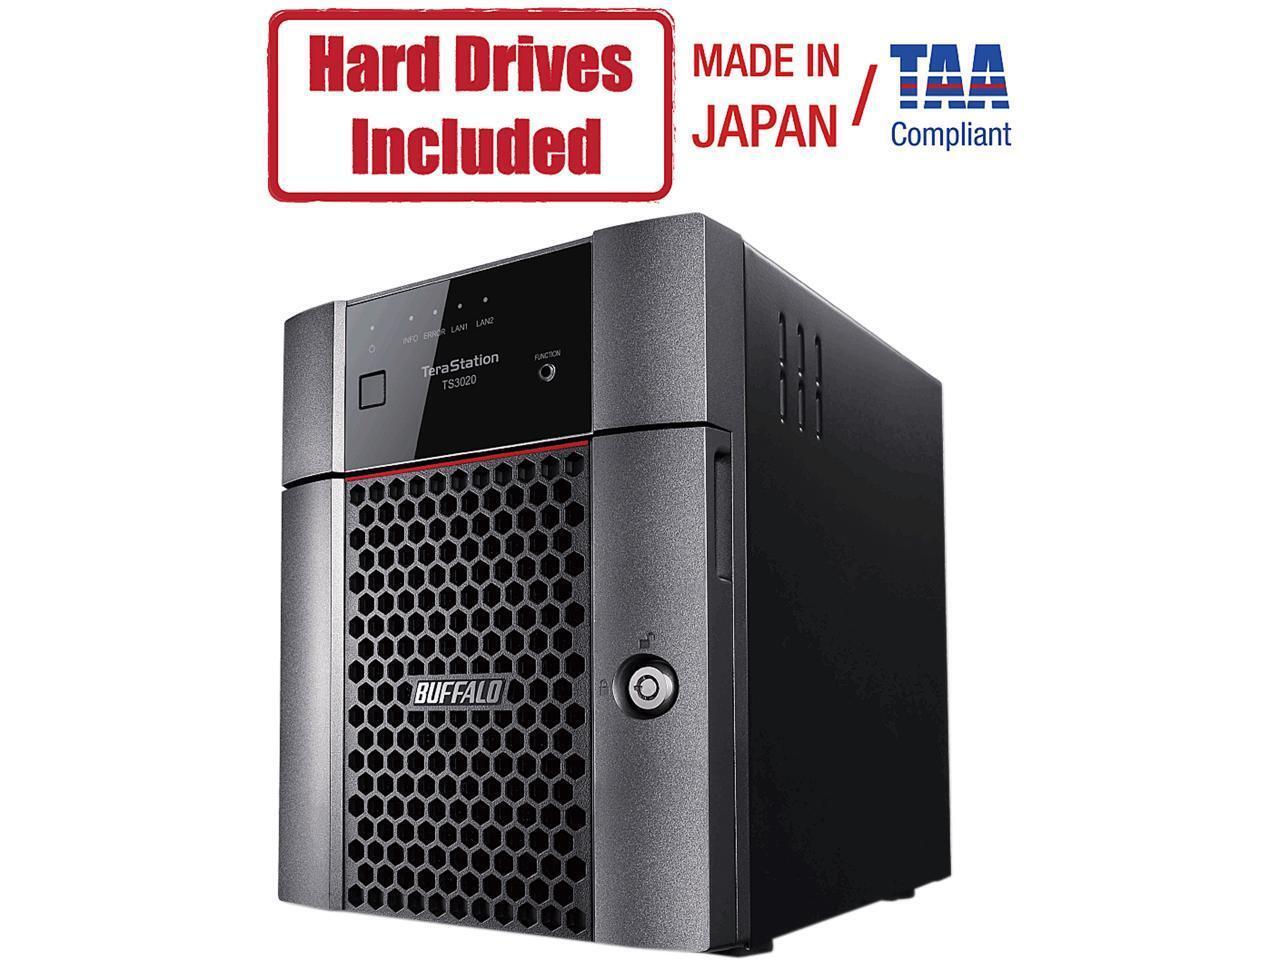 Buffalo TeraStation 3420DN 8TB NAS Hard Drives Included (2 x 4TB, 4 Bay)